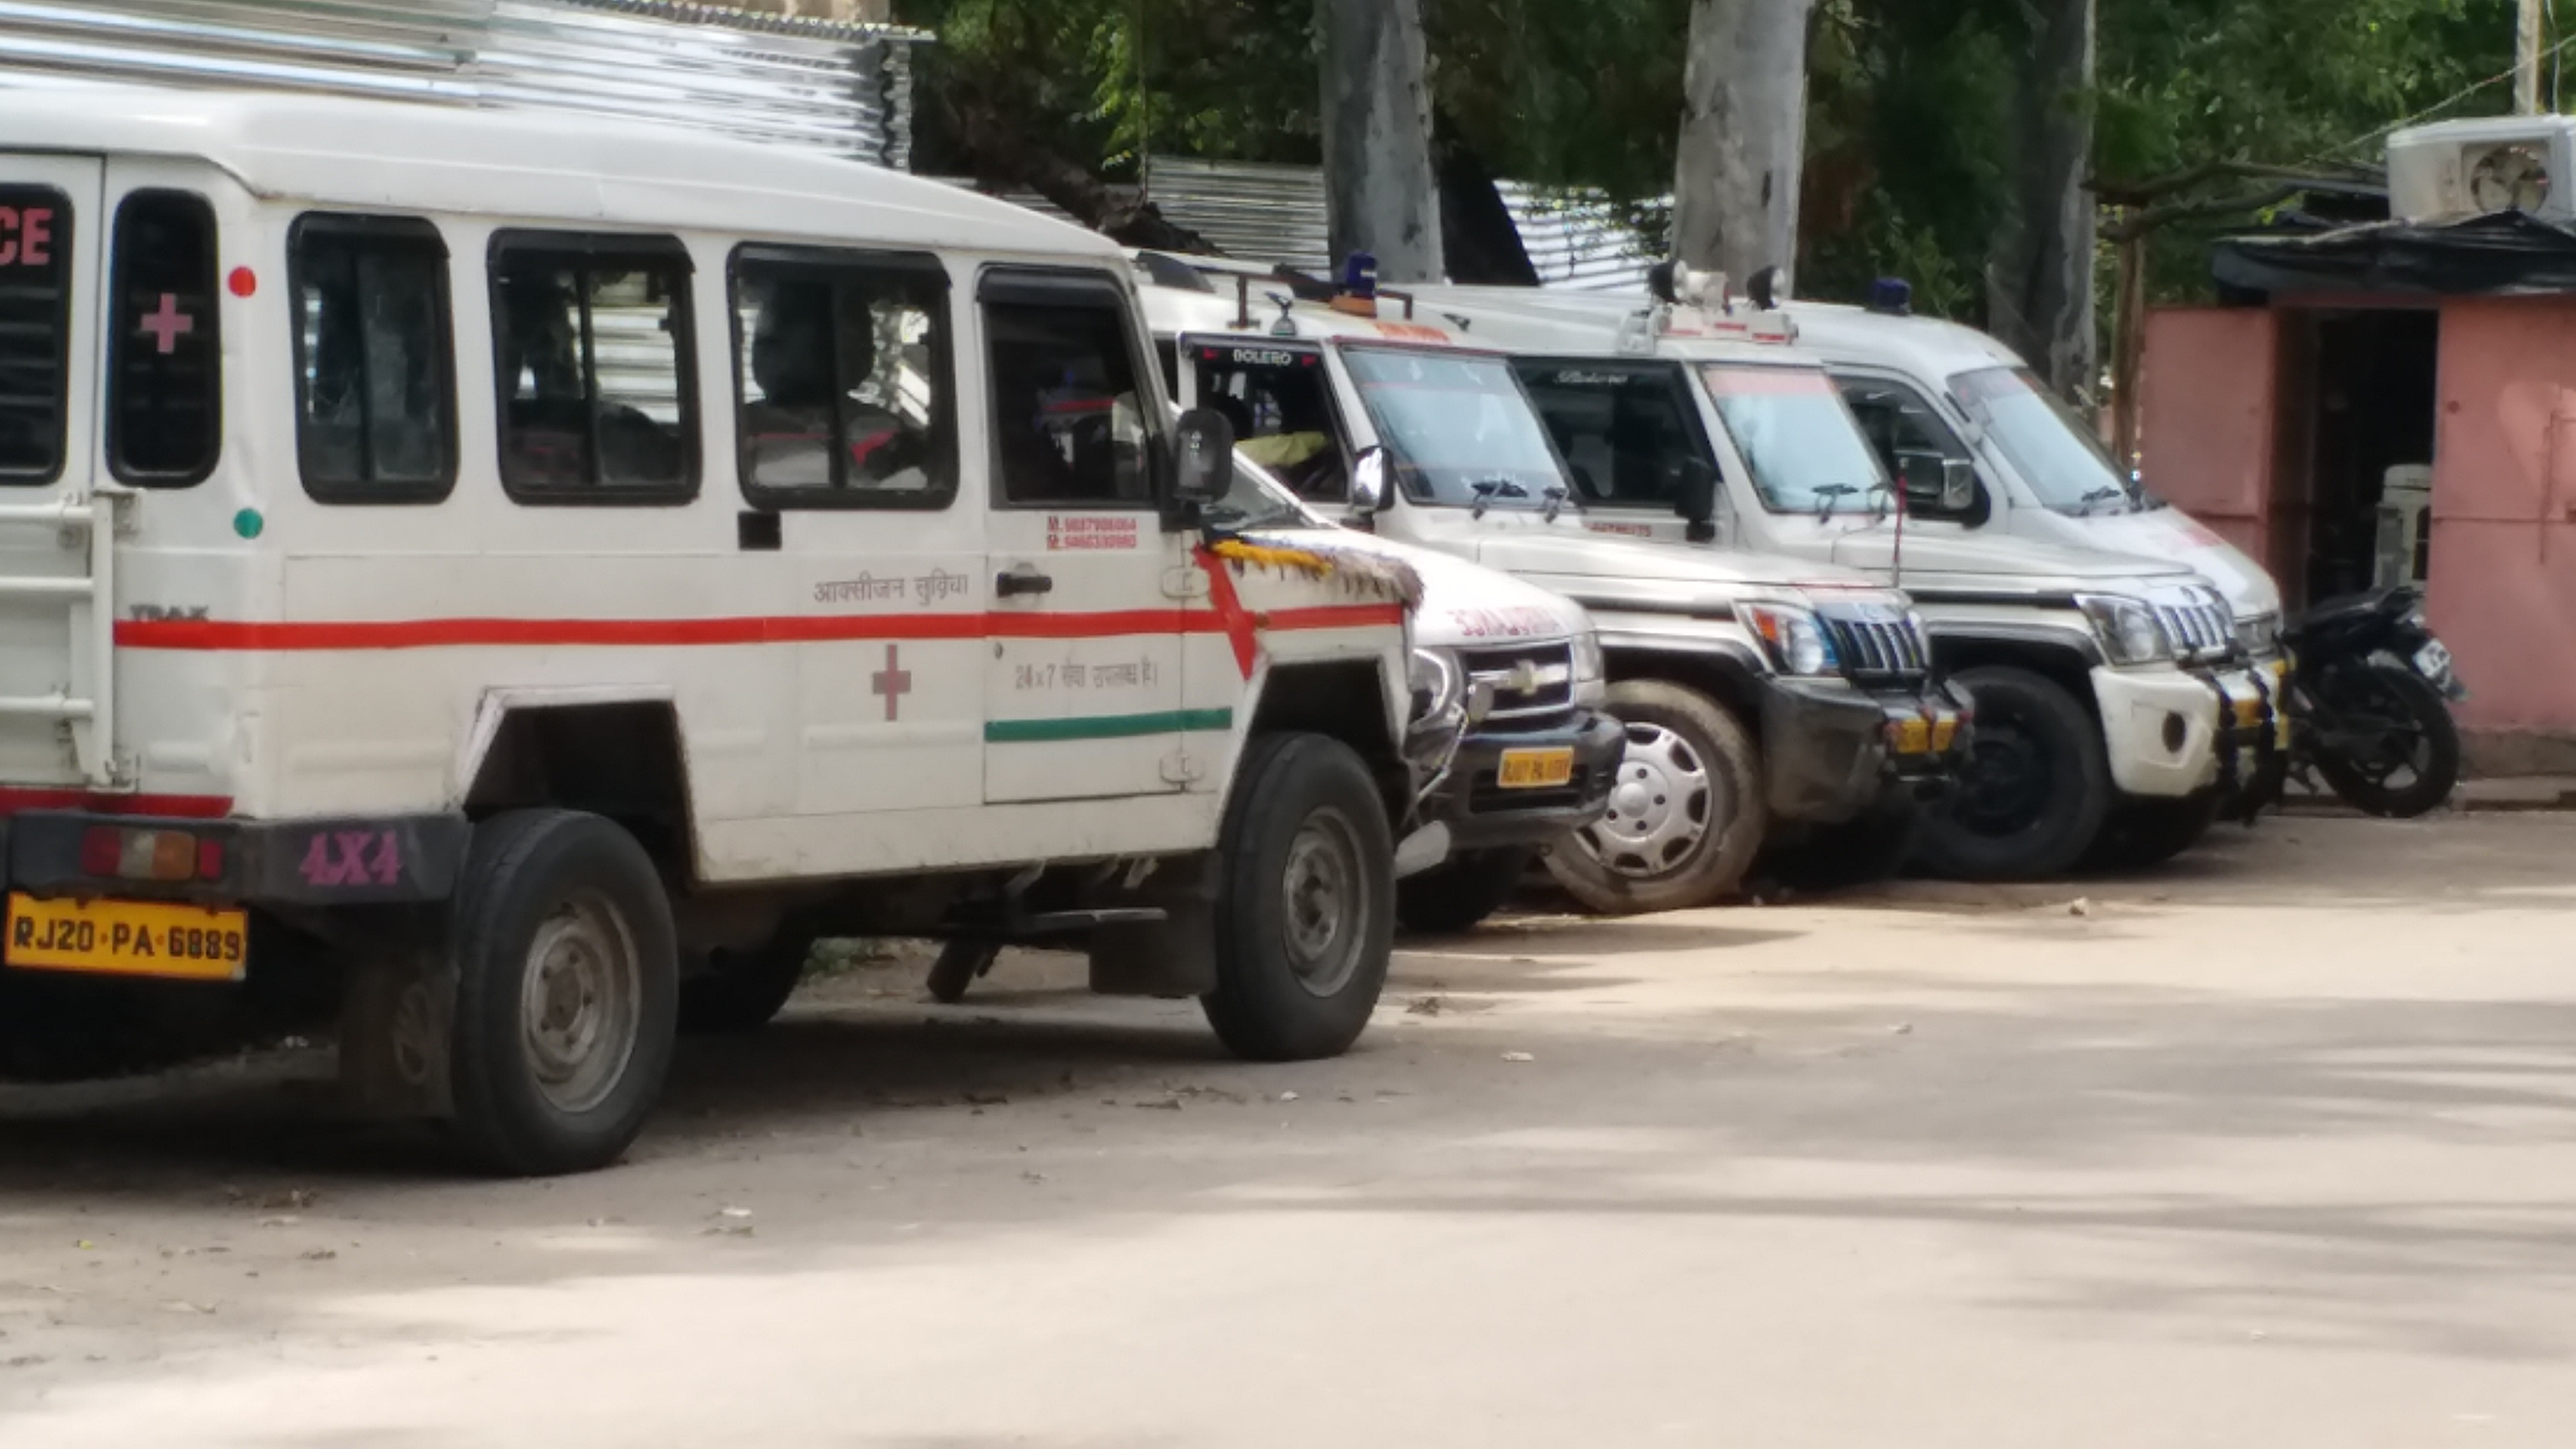 Ambulances falling short of patients